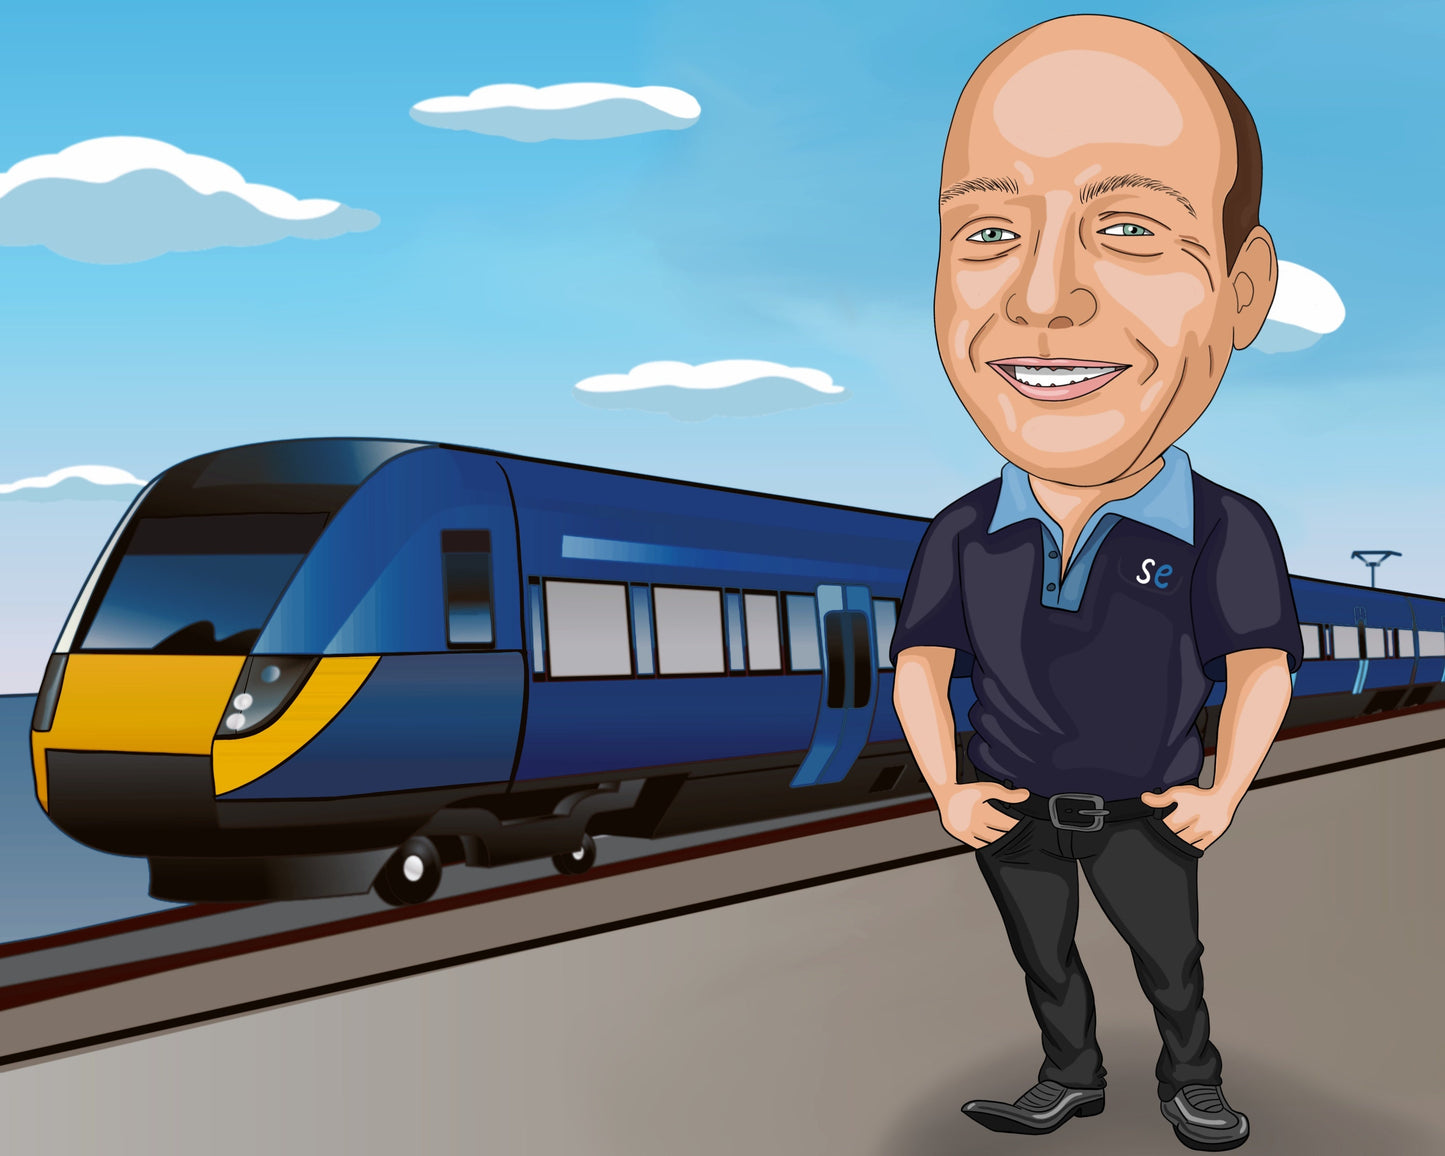 Train Operator Gift - Custom Caricature From Photo, train conductor, train driver gift